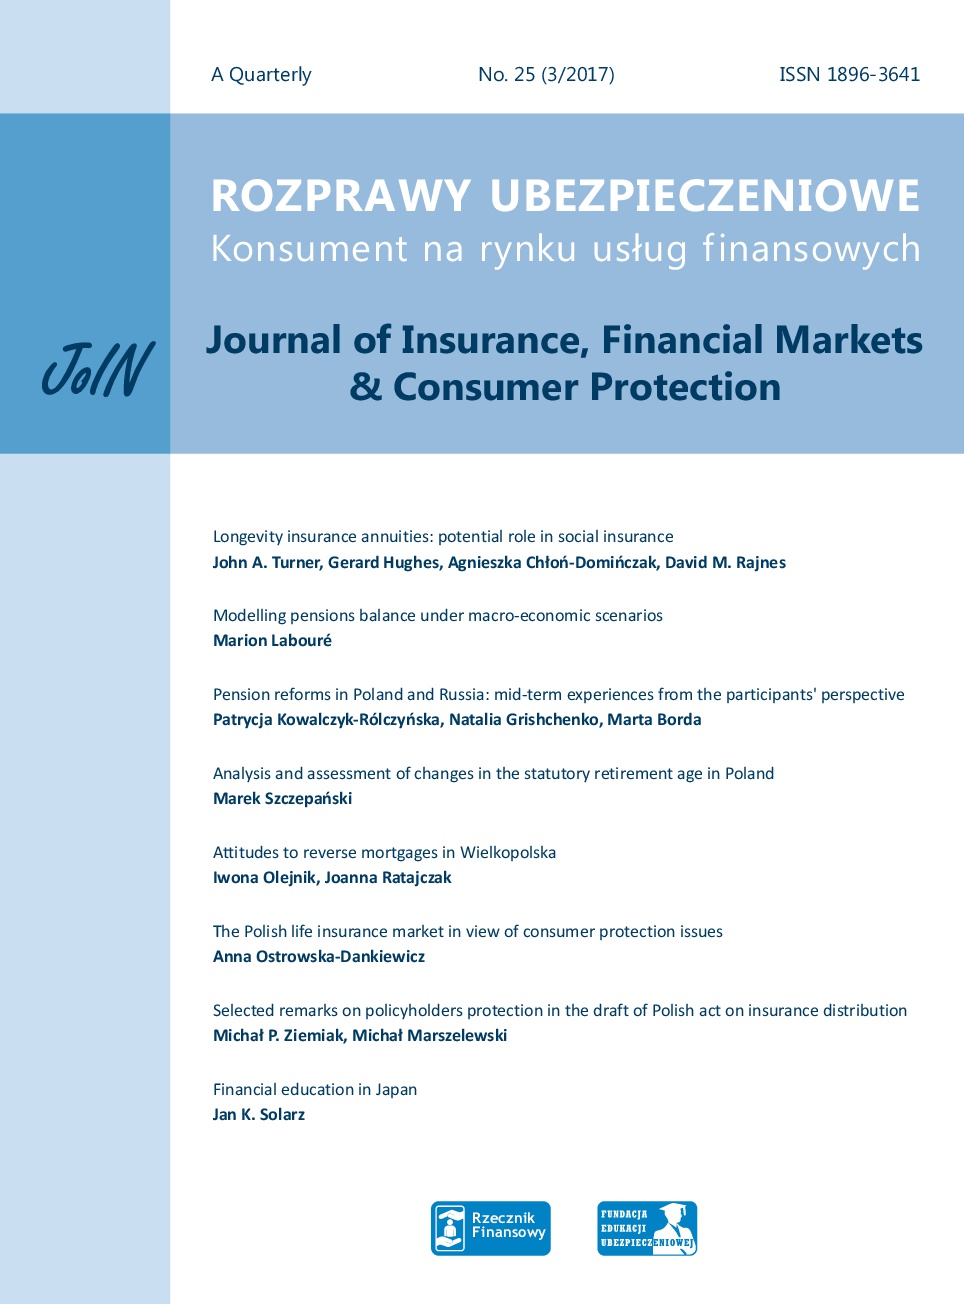 Attitudes to reverse mortgages in Wielkopolska